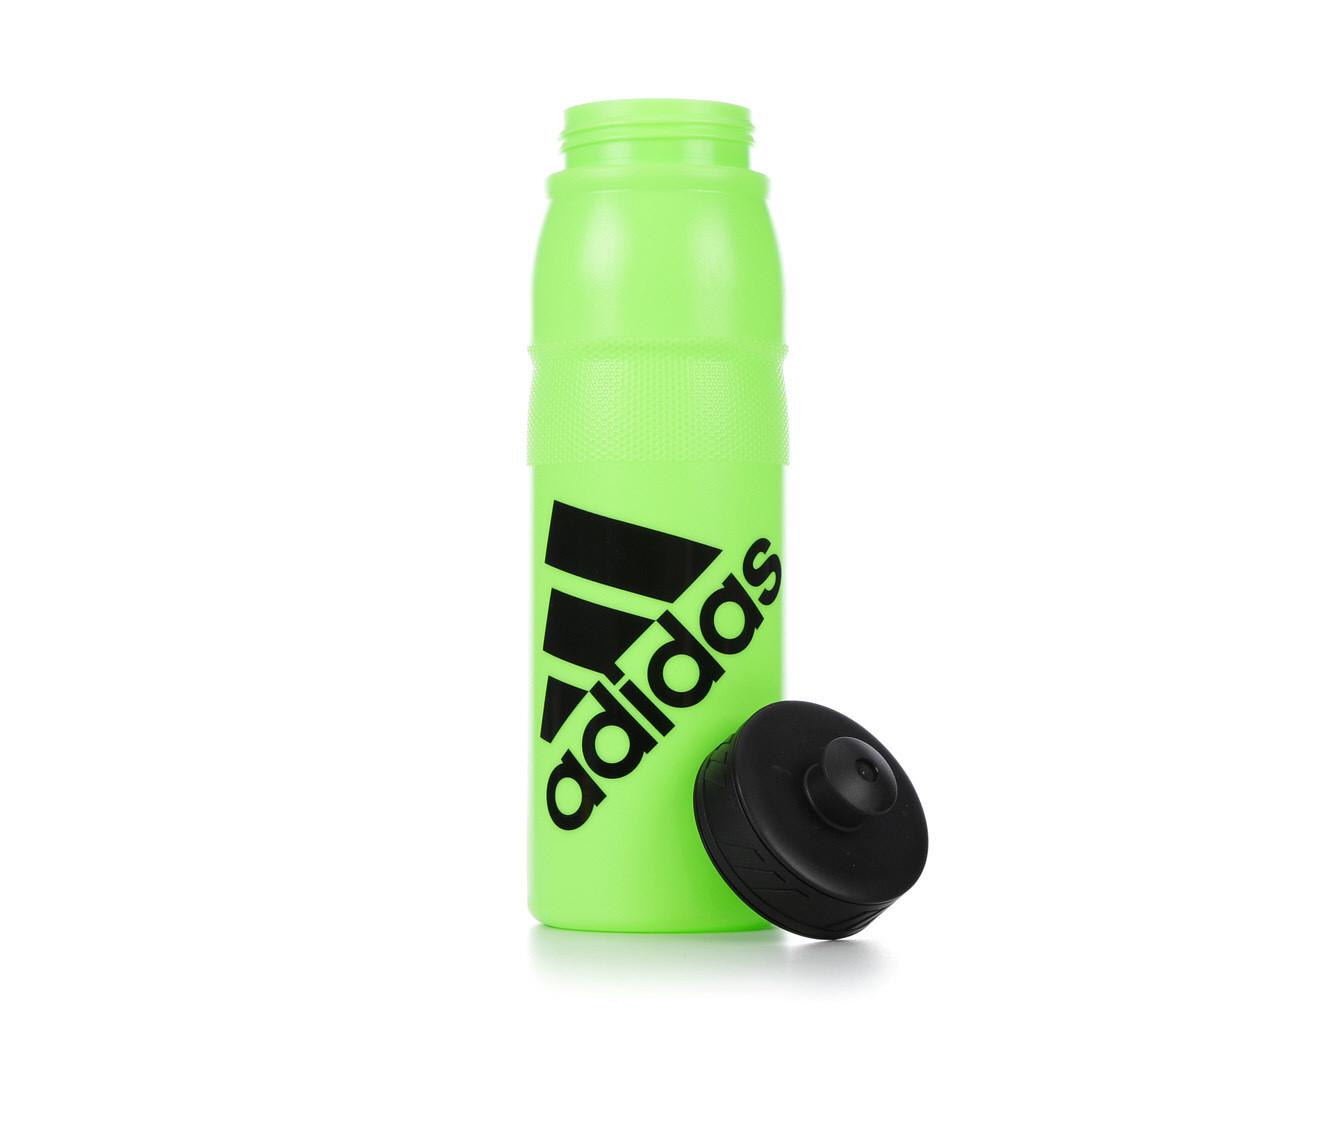 adidas Stadium 750 Plastic Water Bottle